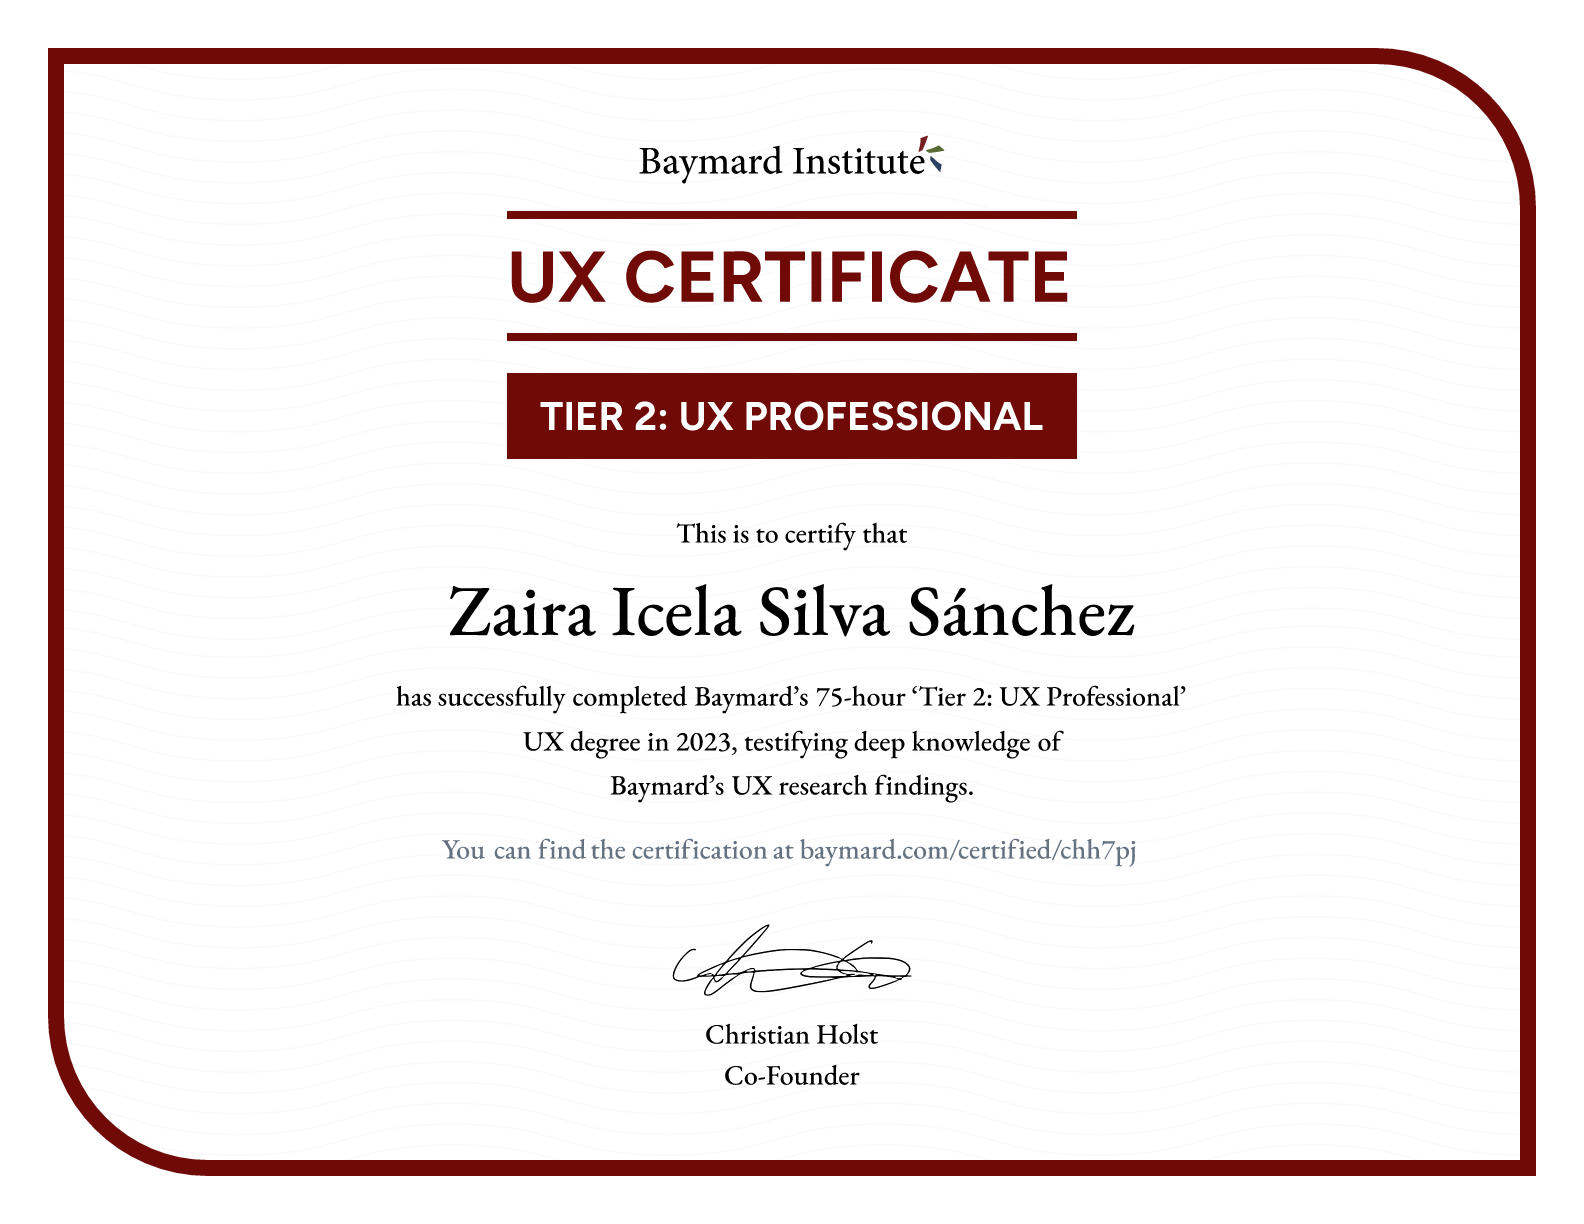 Zaira Icela Silva Sánchez’s certificate